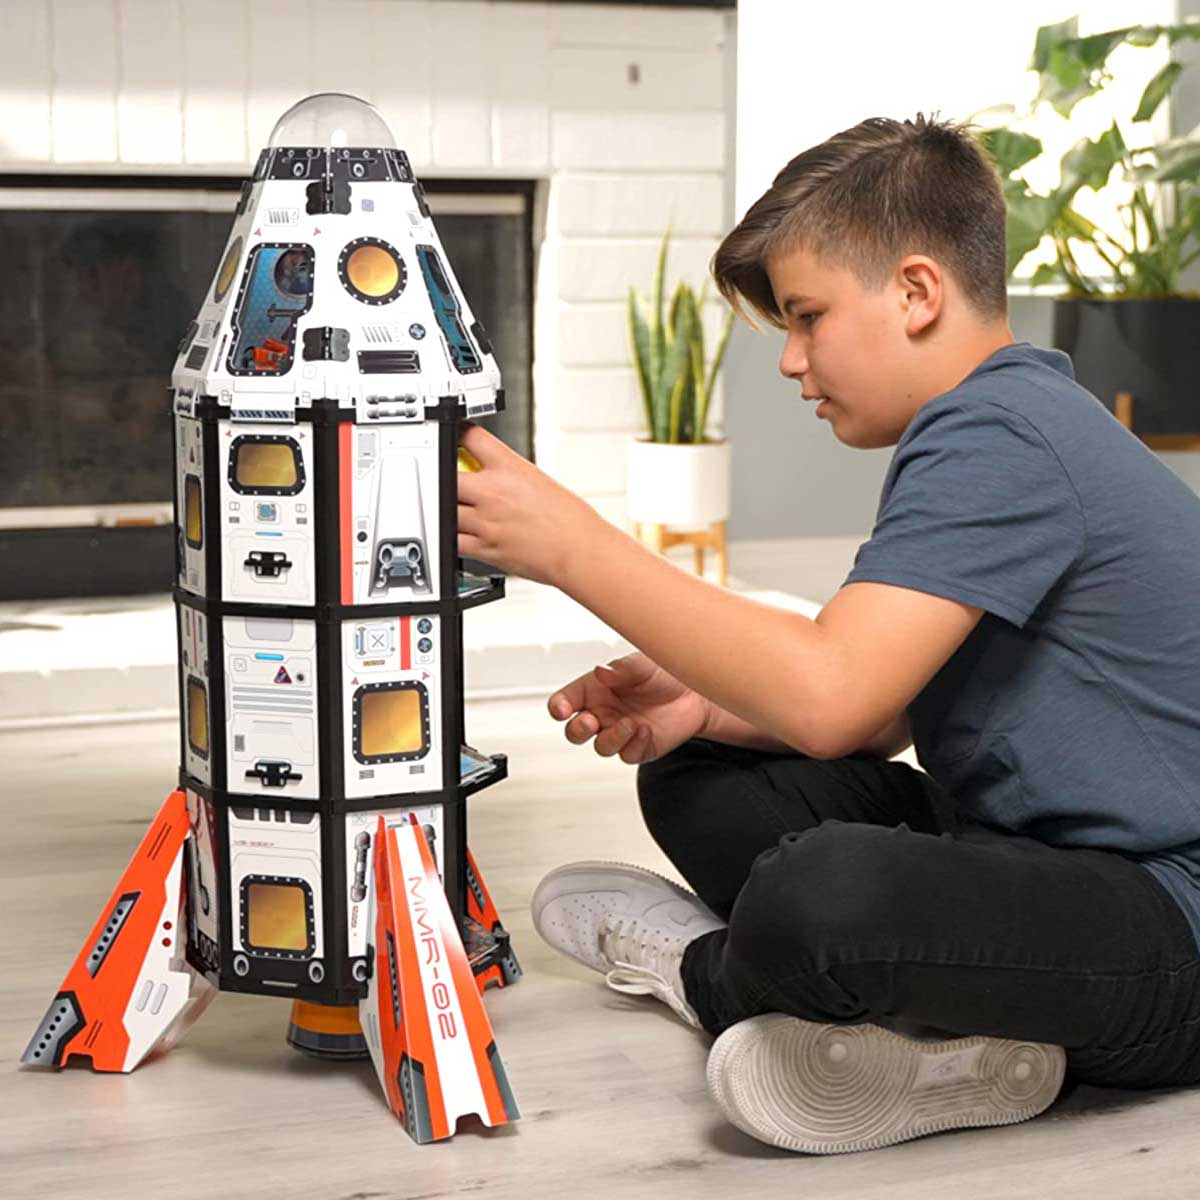 Gujo Adventure Mission Mars Rocket STEM authenticated building set for ages 7+